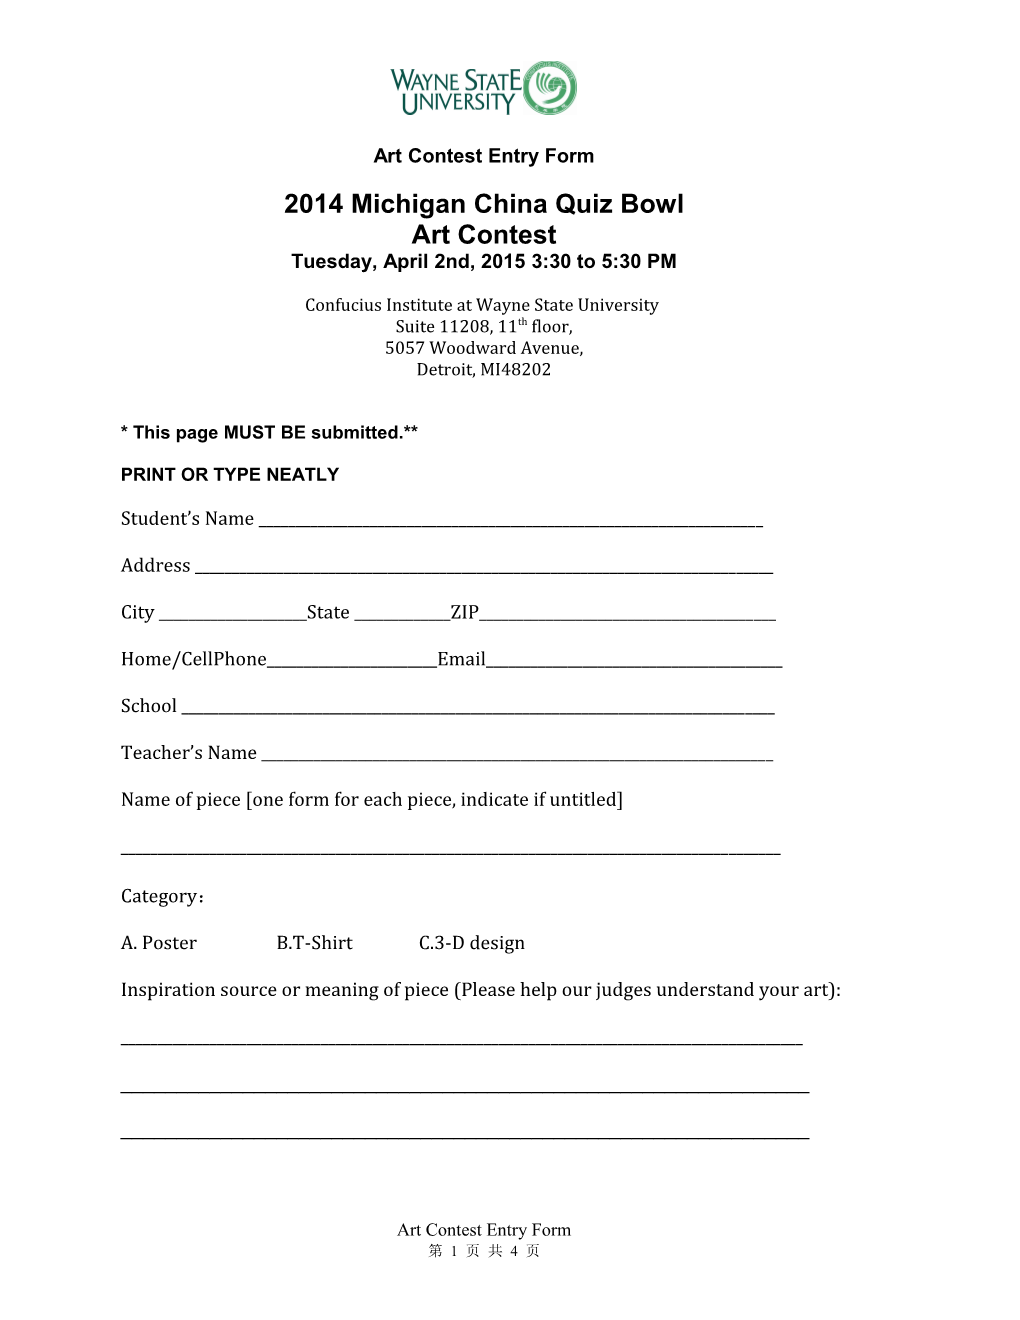 2014 Michigan China Quiz Bowl Art Contest